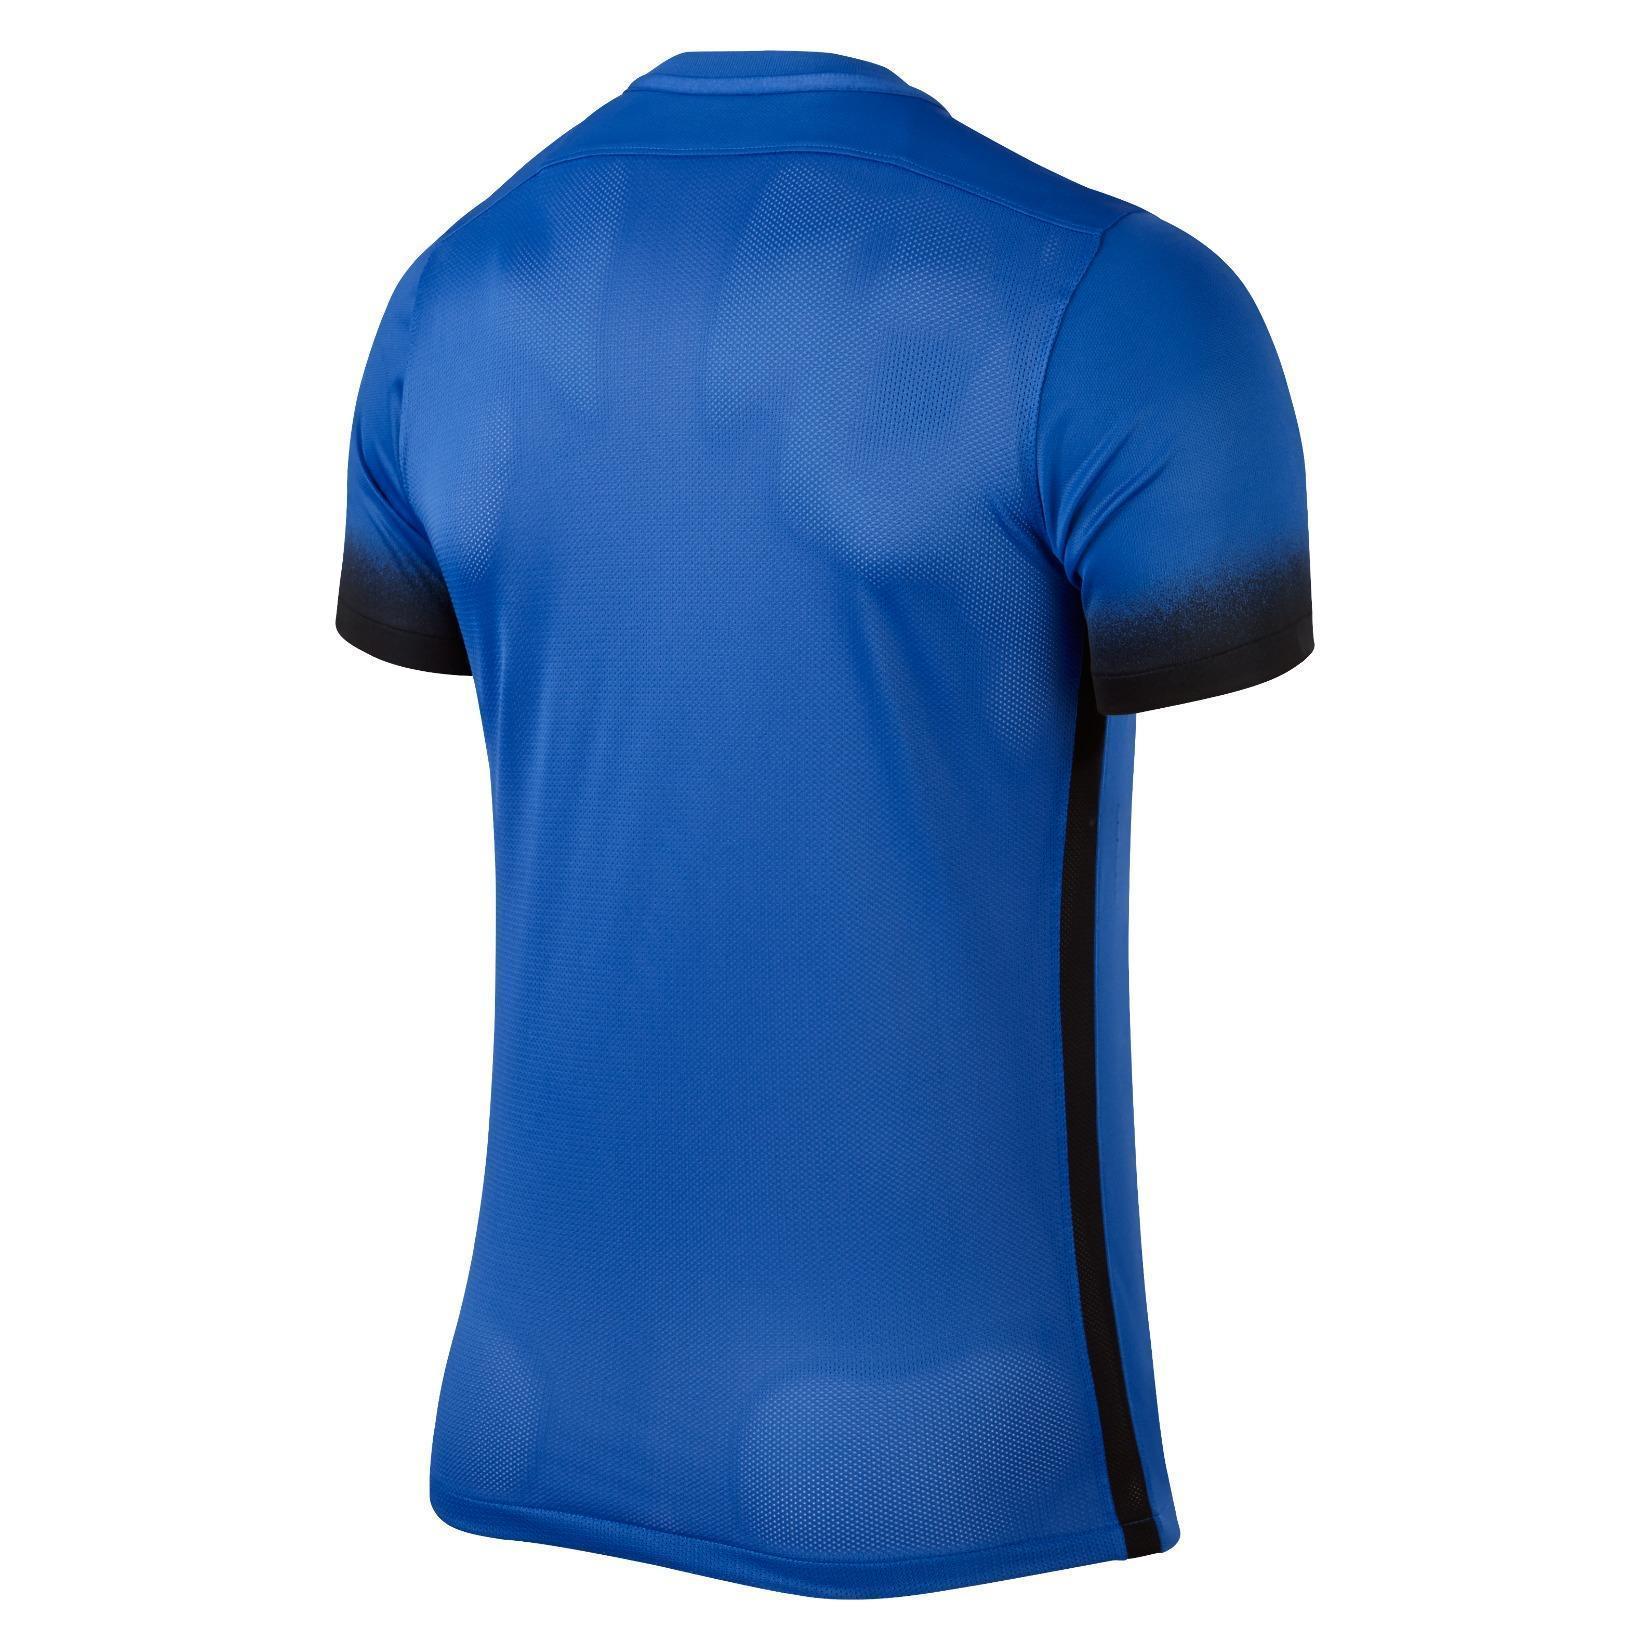 Nike Laser III Premium Short Sleeve Shirt - Kitlocker.com